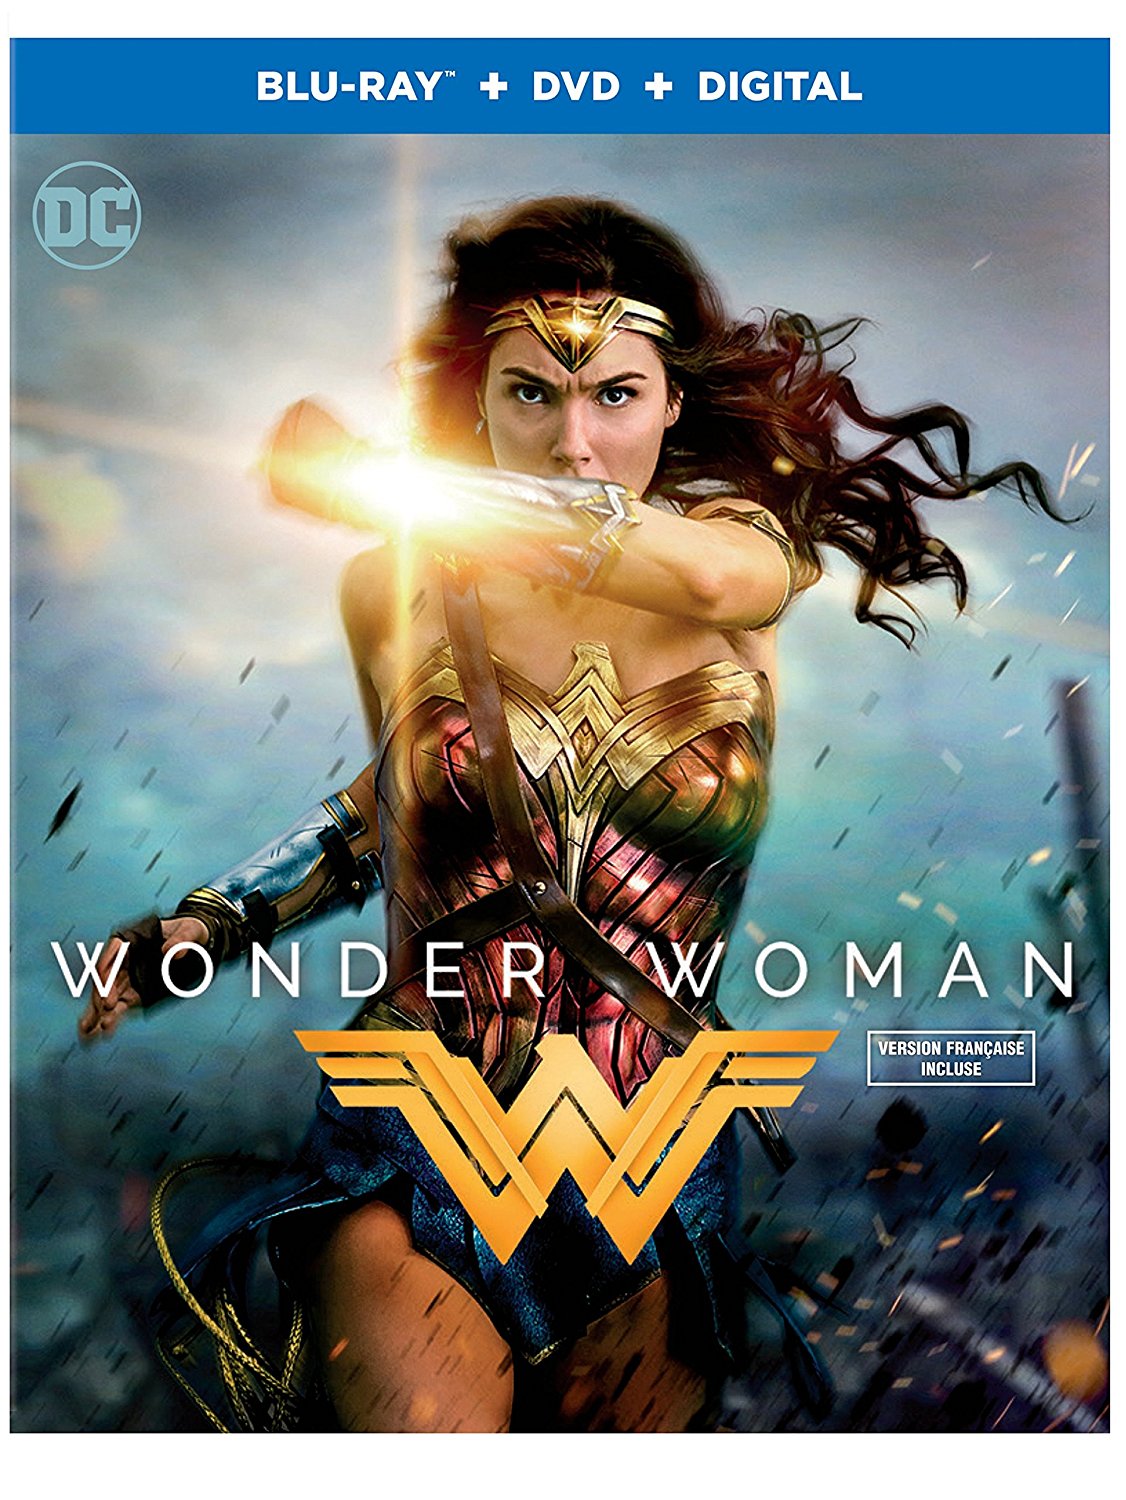 Wonder Woman on Blu-ray, DVD and Digital HD